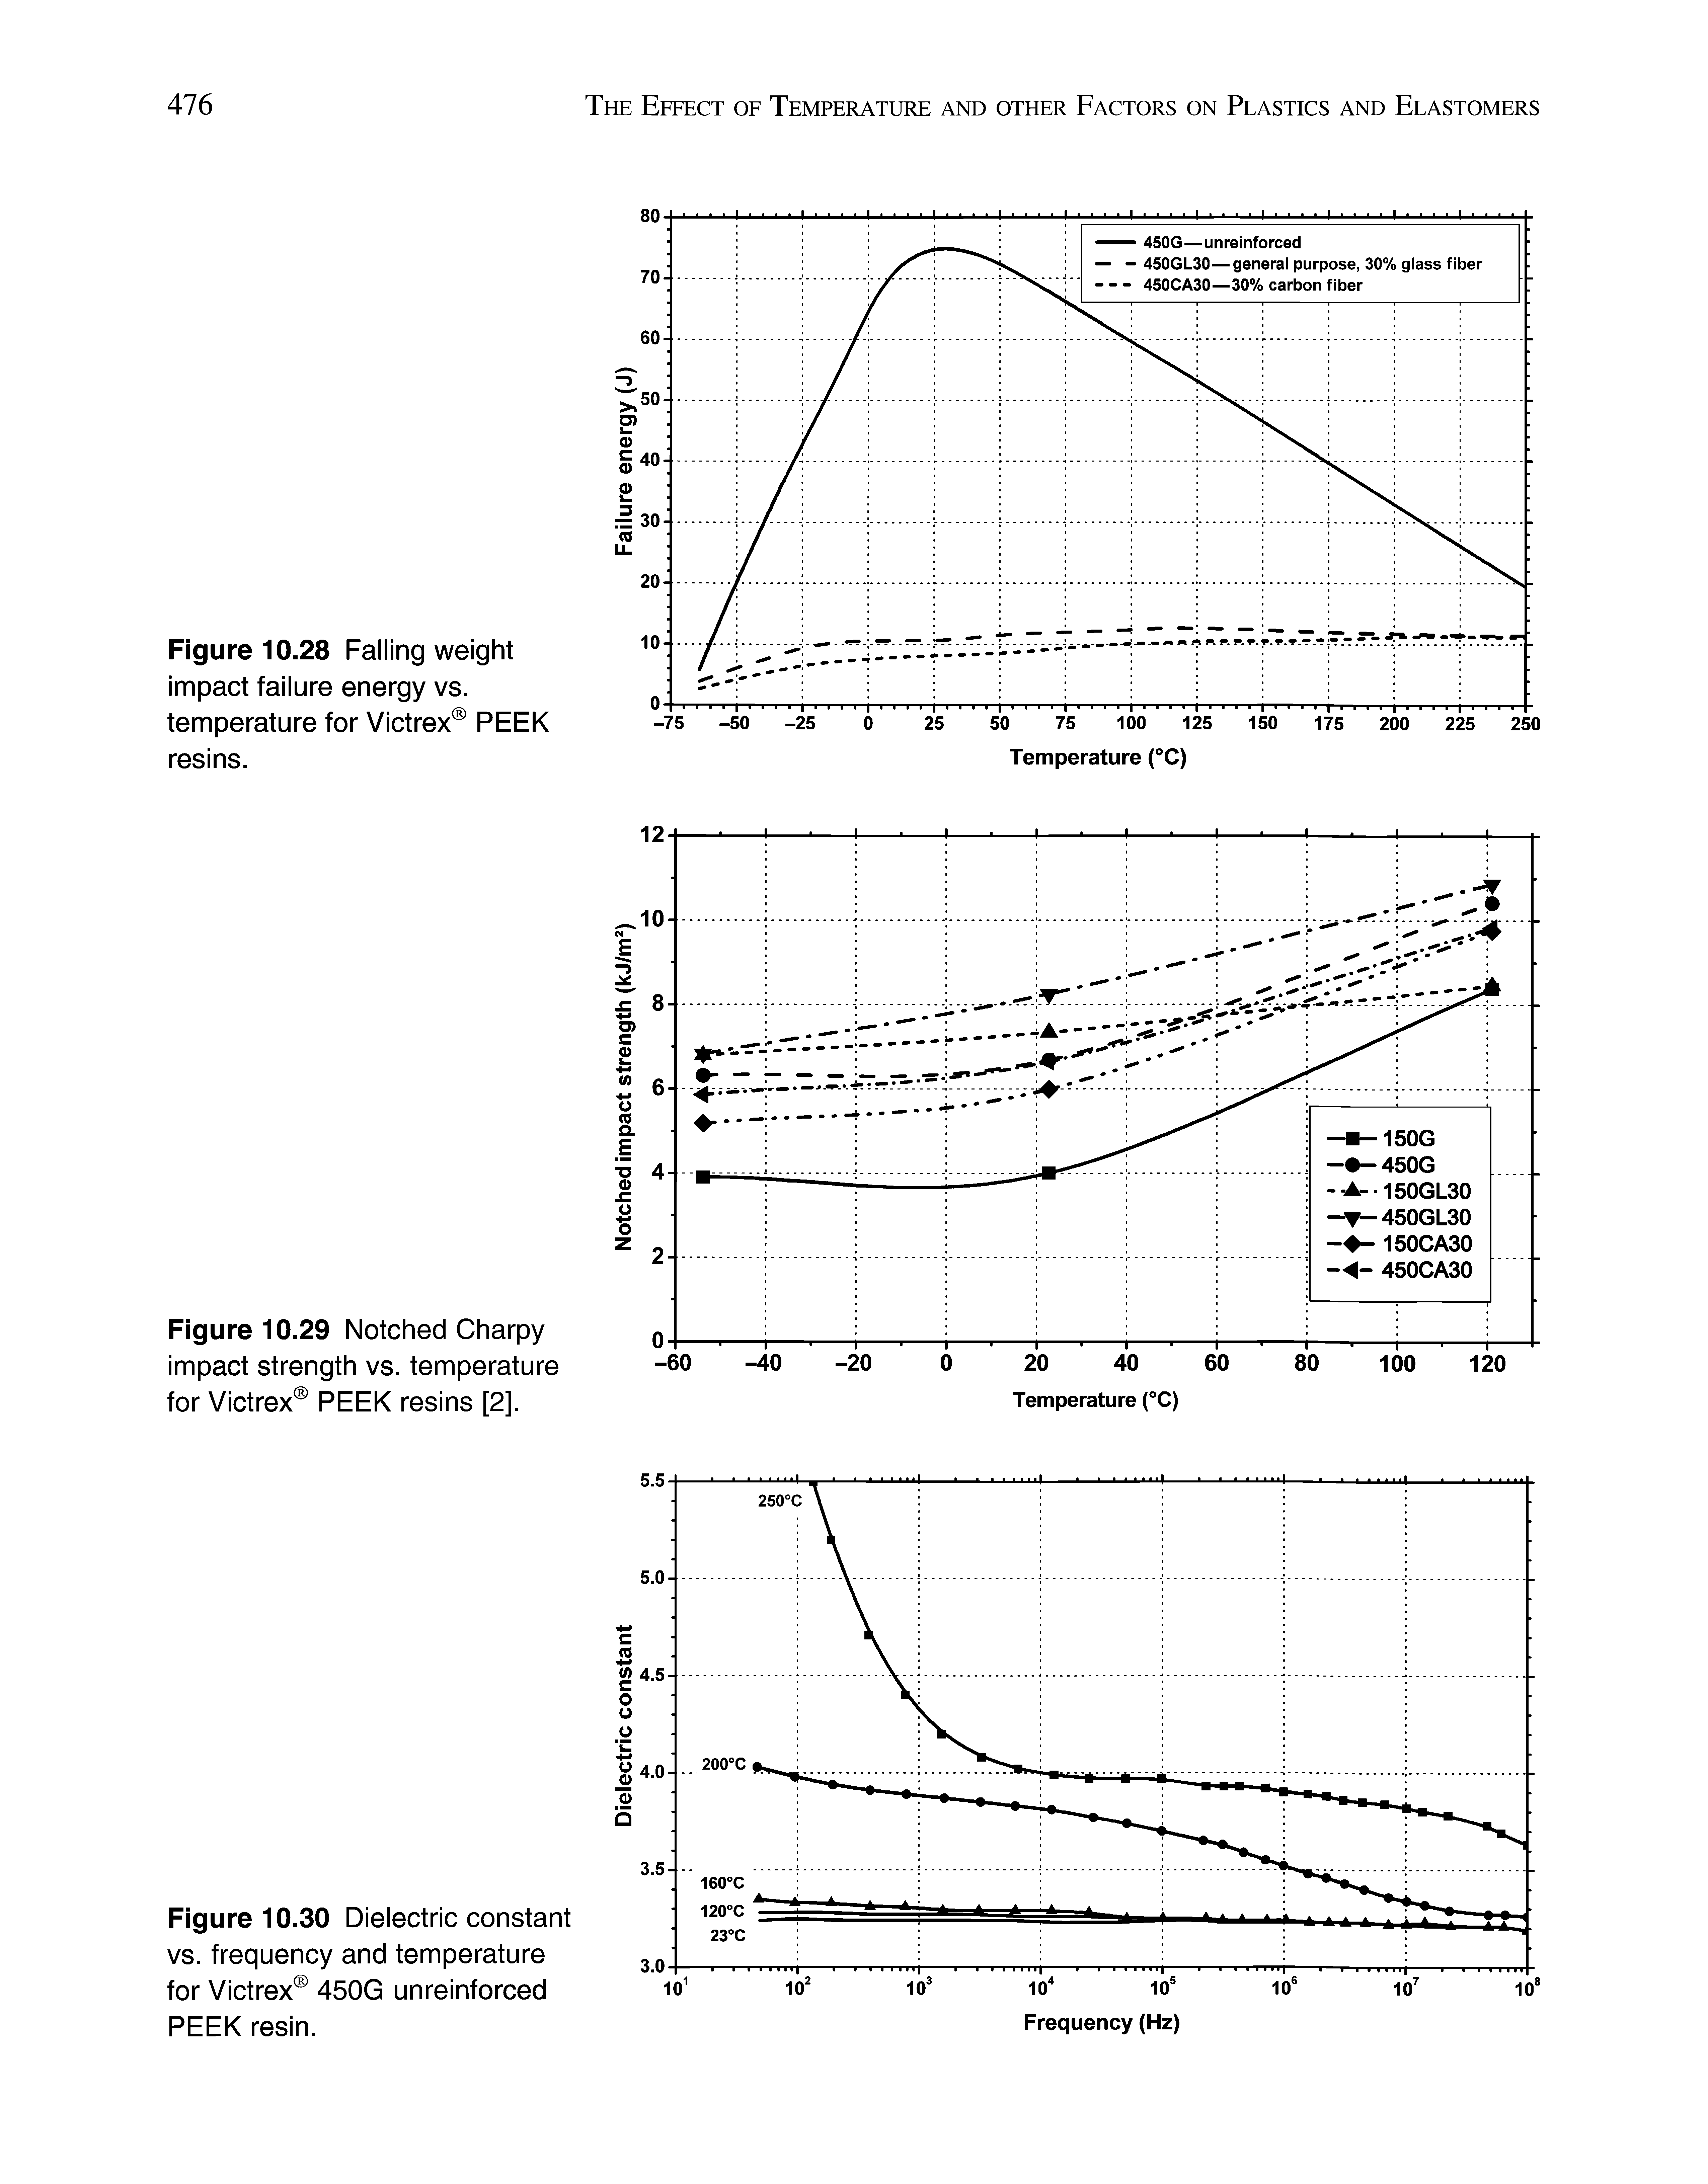 Figure 10.28 Falling weight impact failure energy vs. temperature for Victrex PEEK resins.